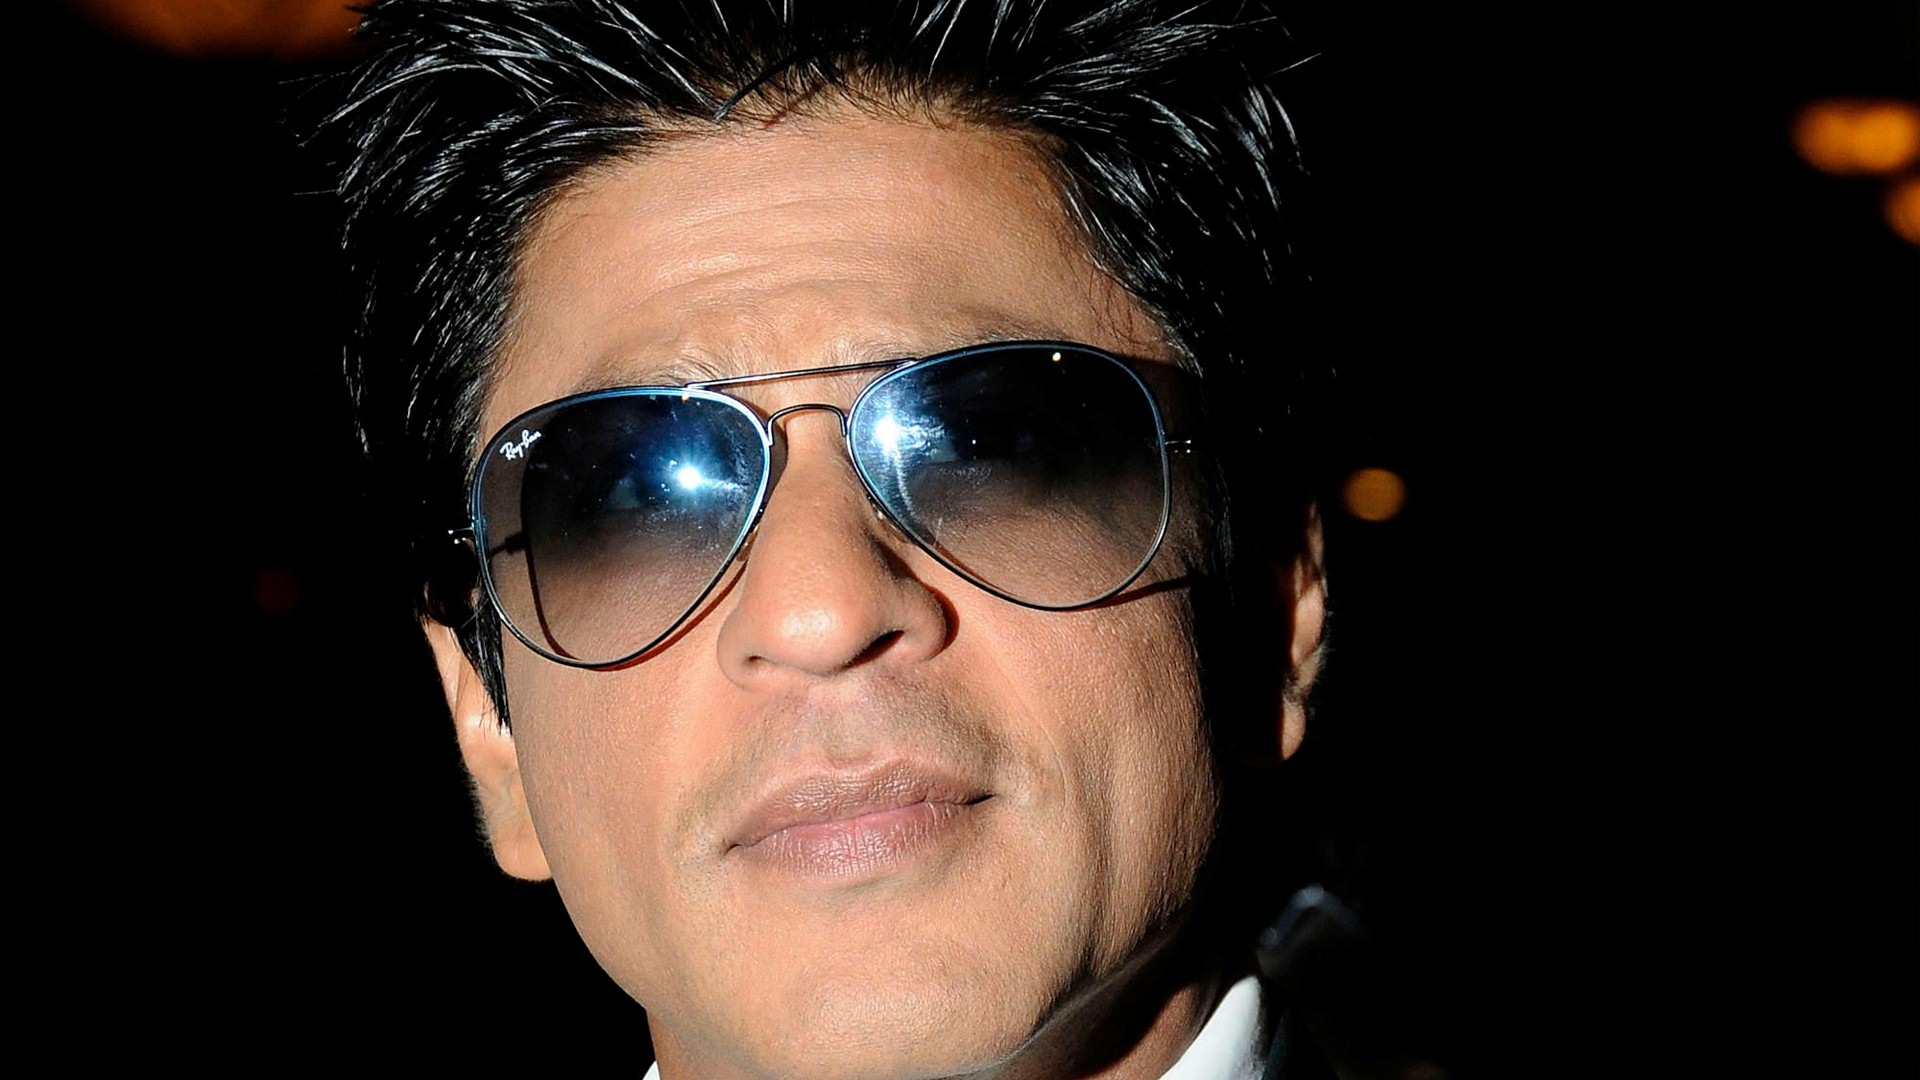 Famous Bollywood Actor Shahrukh Khan In Sunglasses - Shahrukh Khan Hair  Style - 1920x1080 Wallpaper 